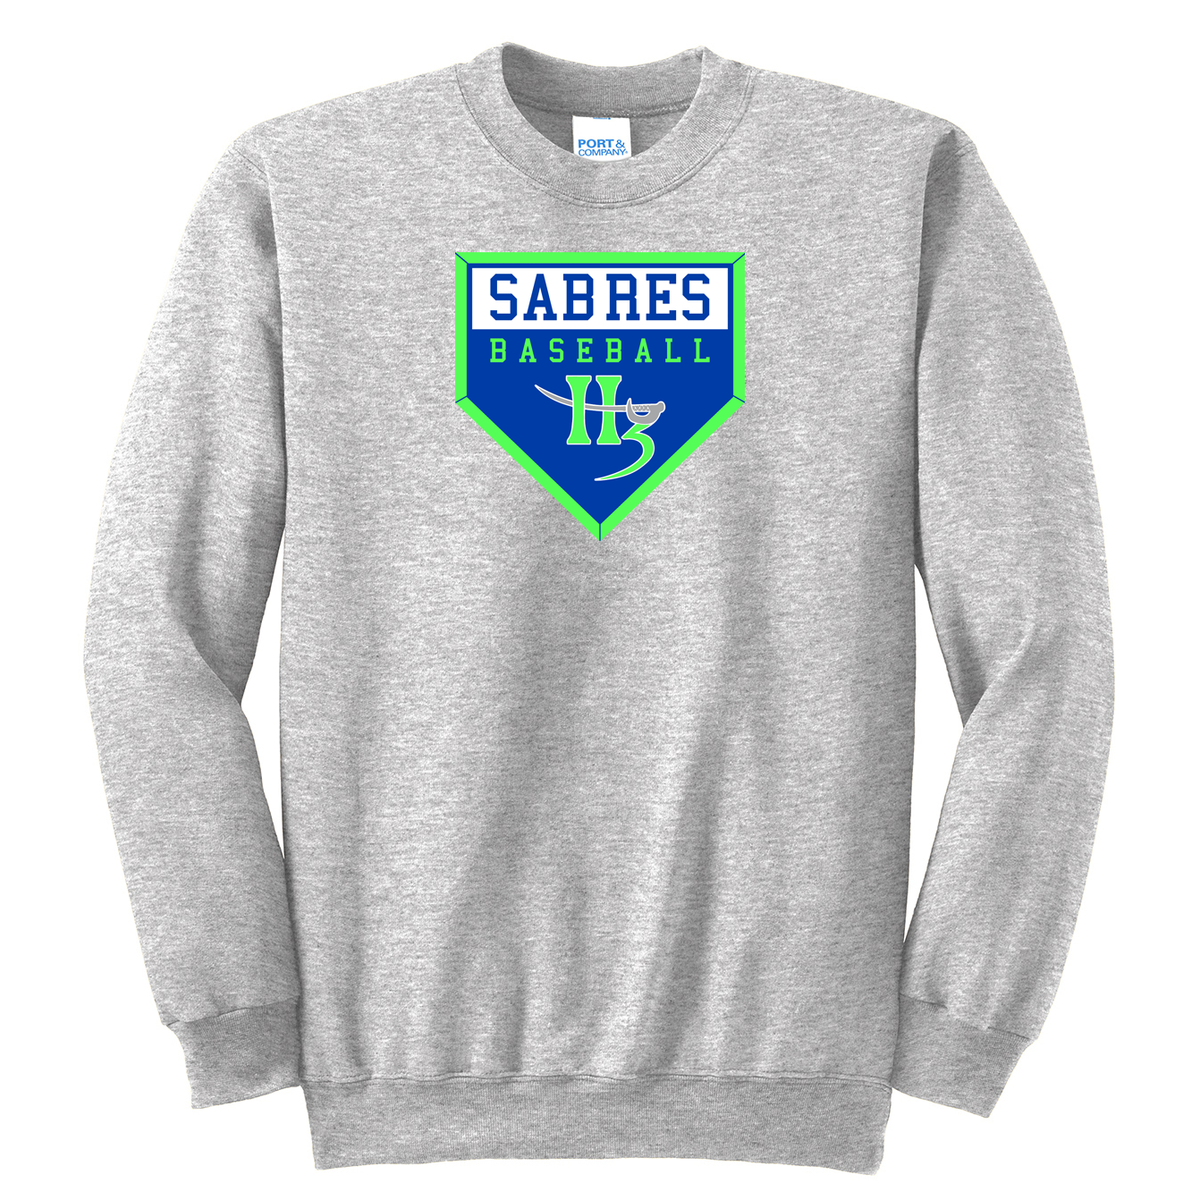 H3 Sabres Baseball  Crew Neck Sweater